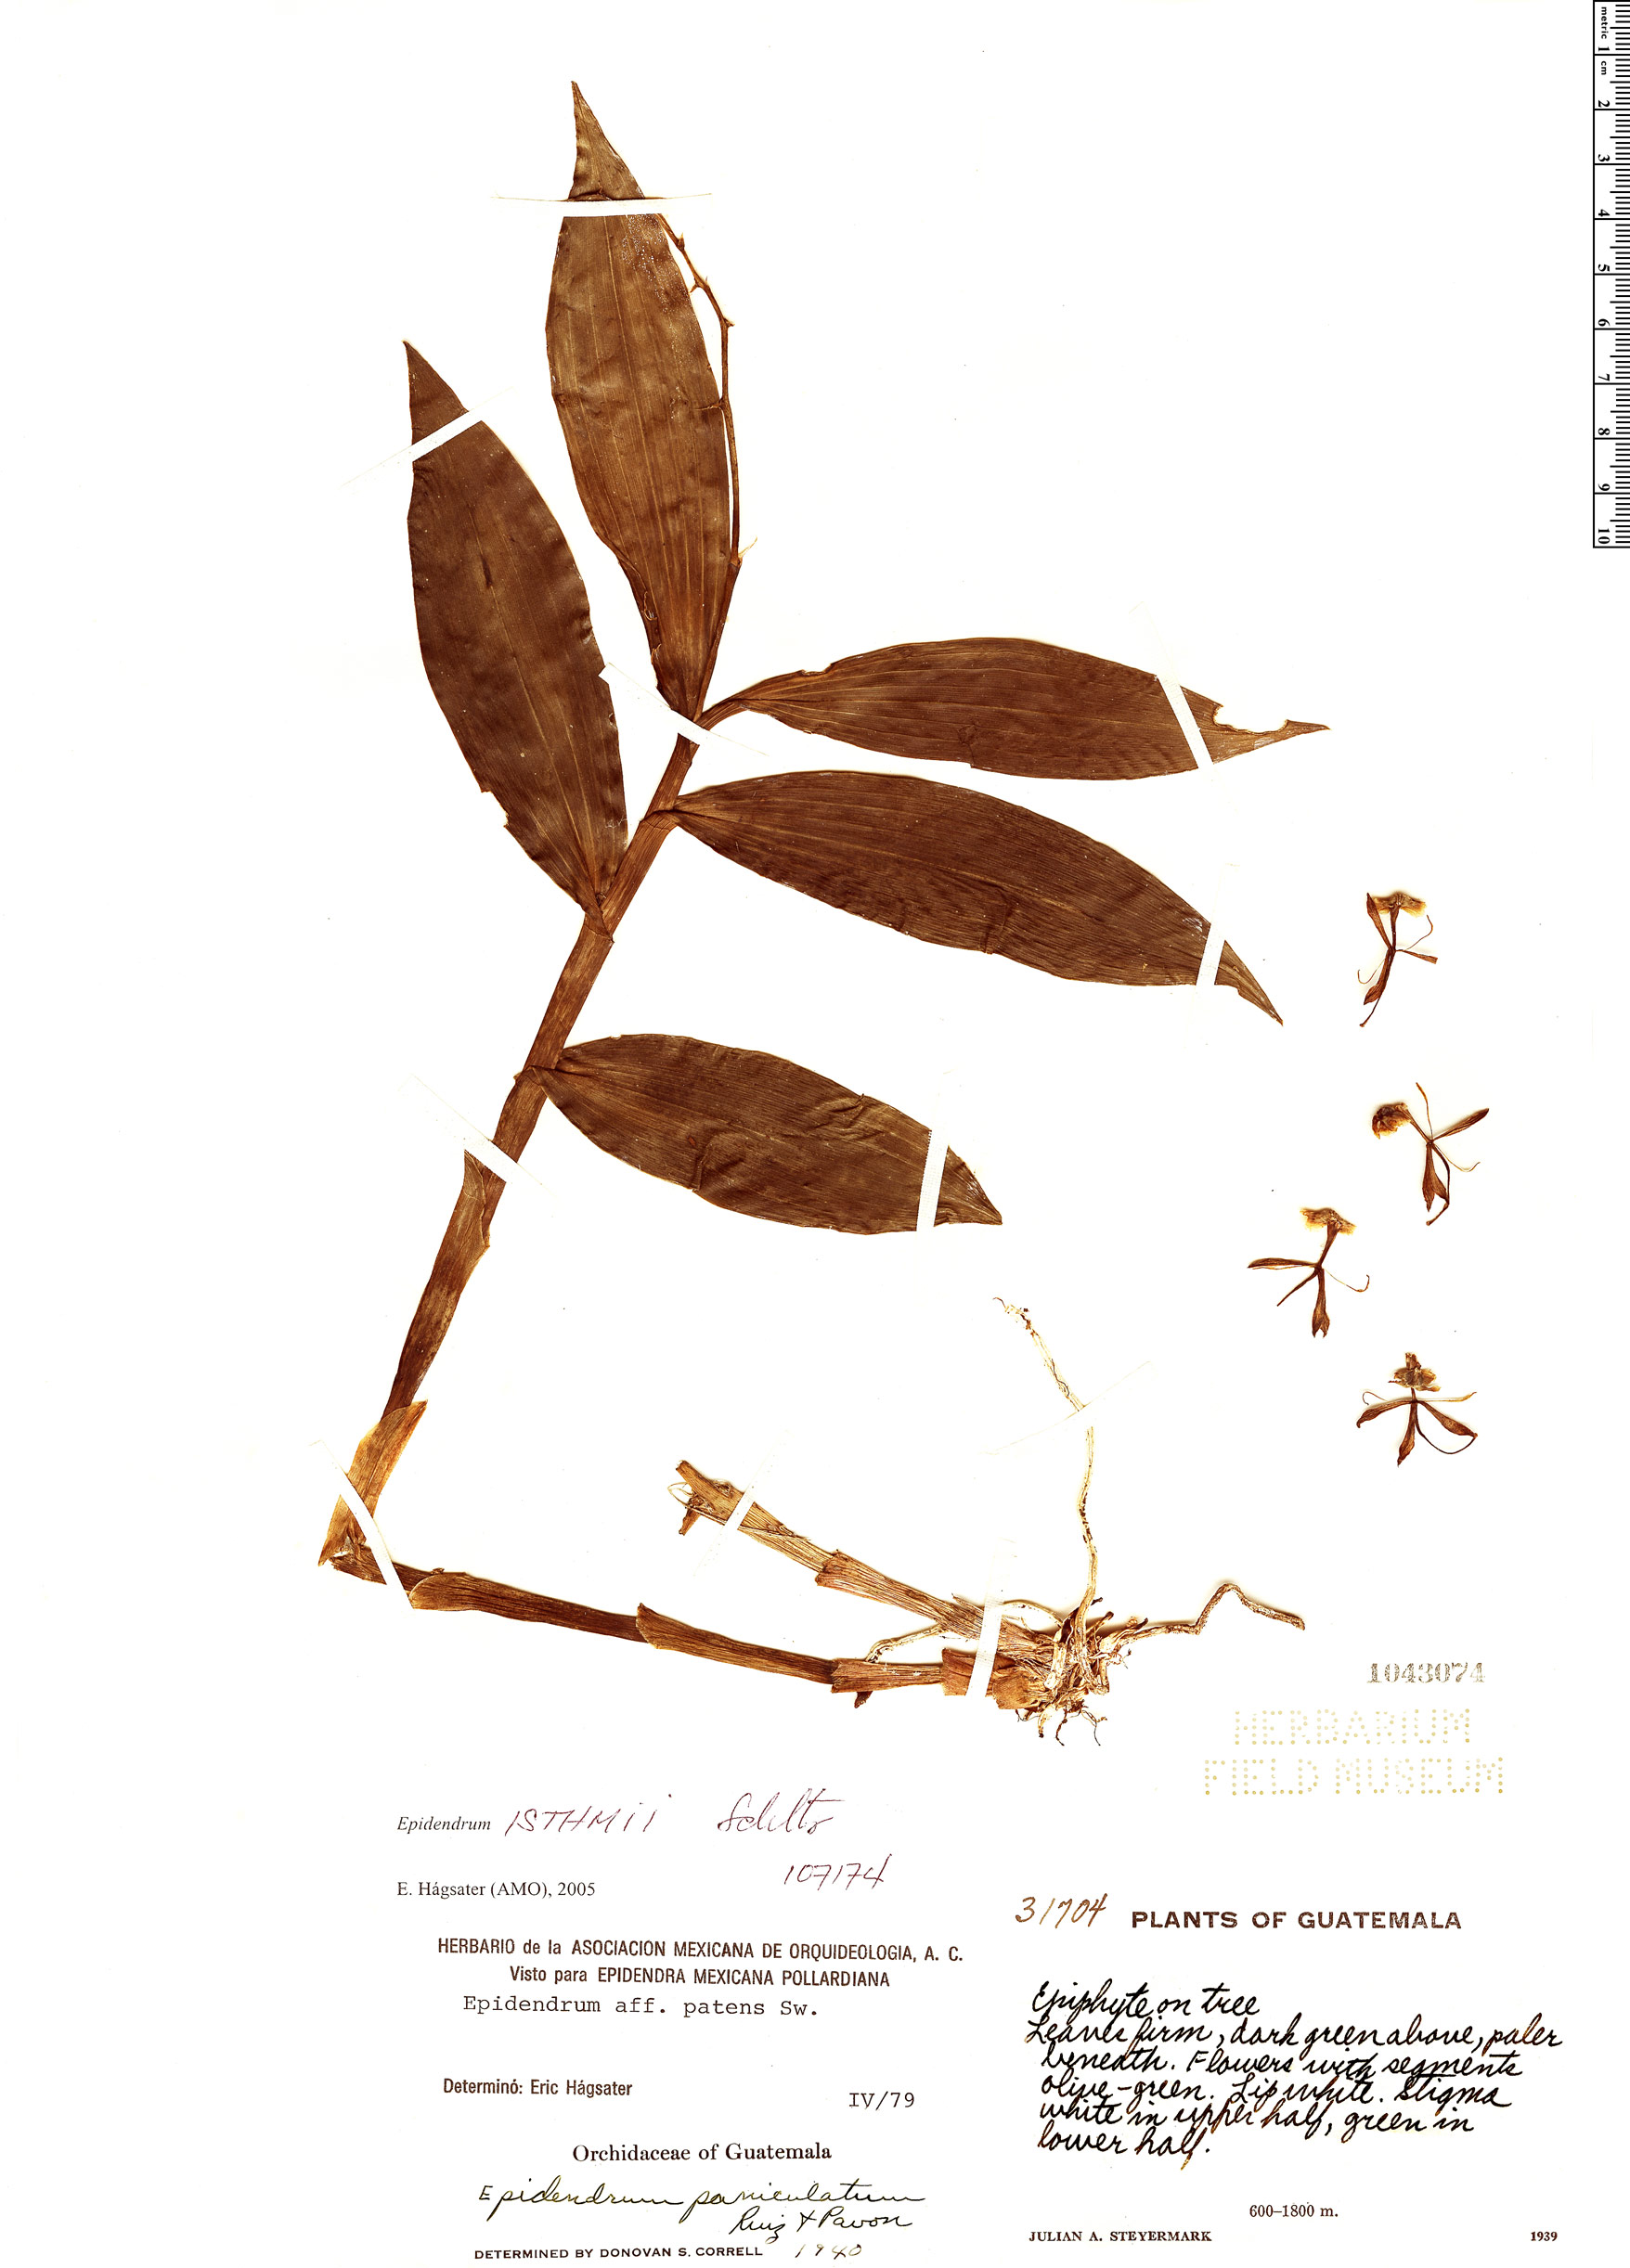 Epidendrum isthmi image